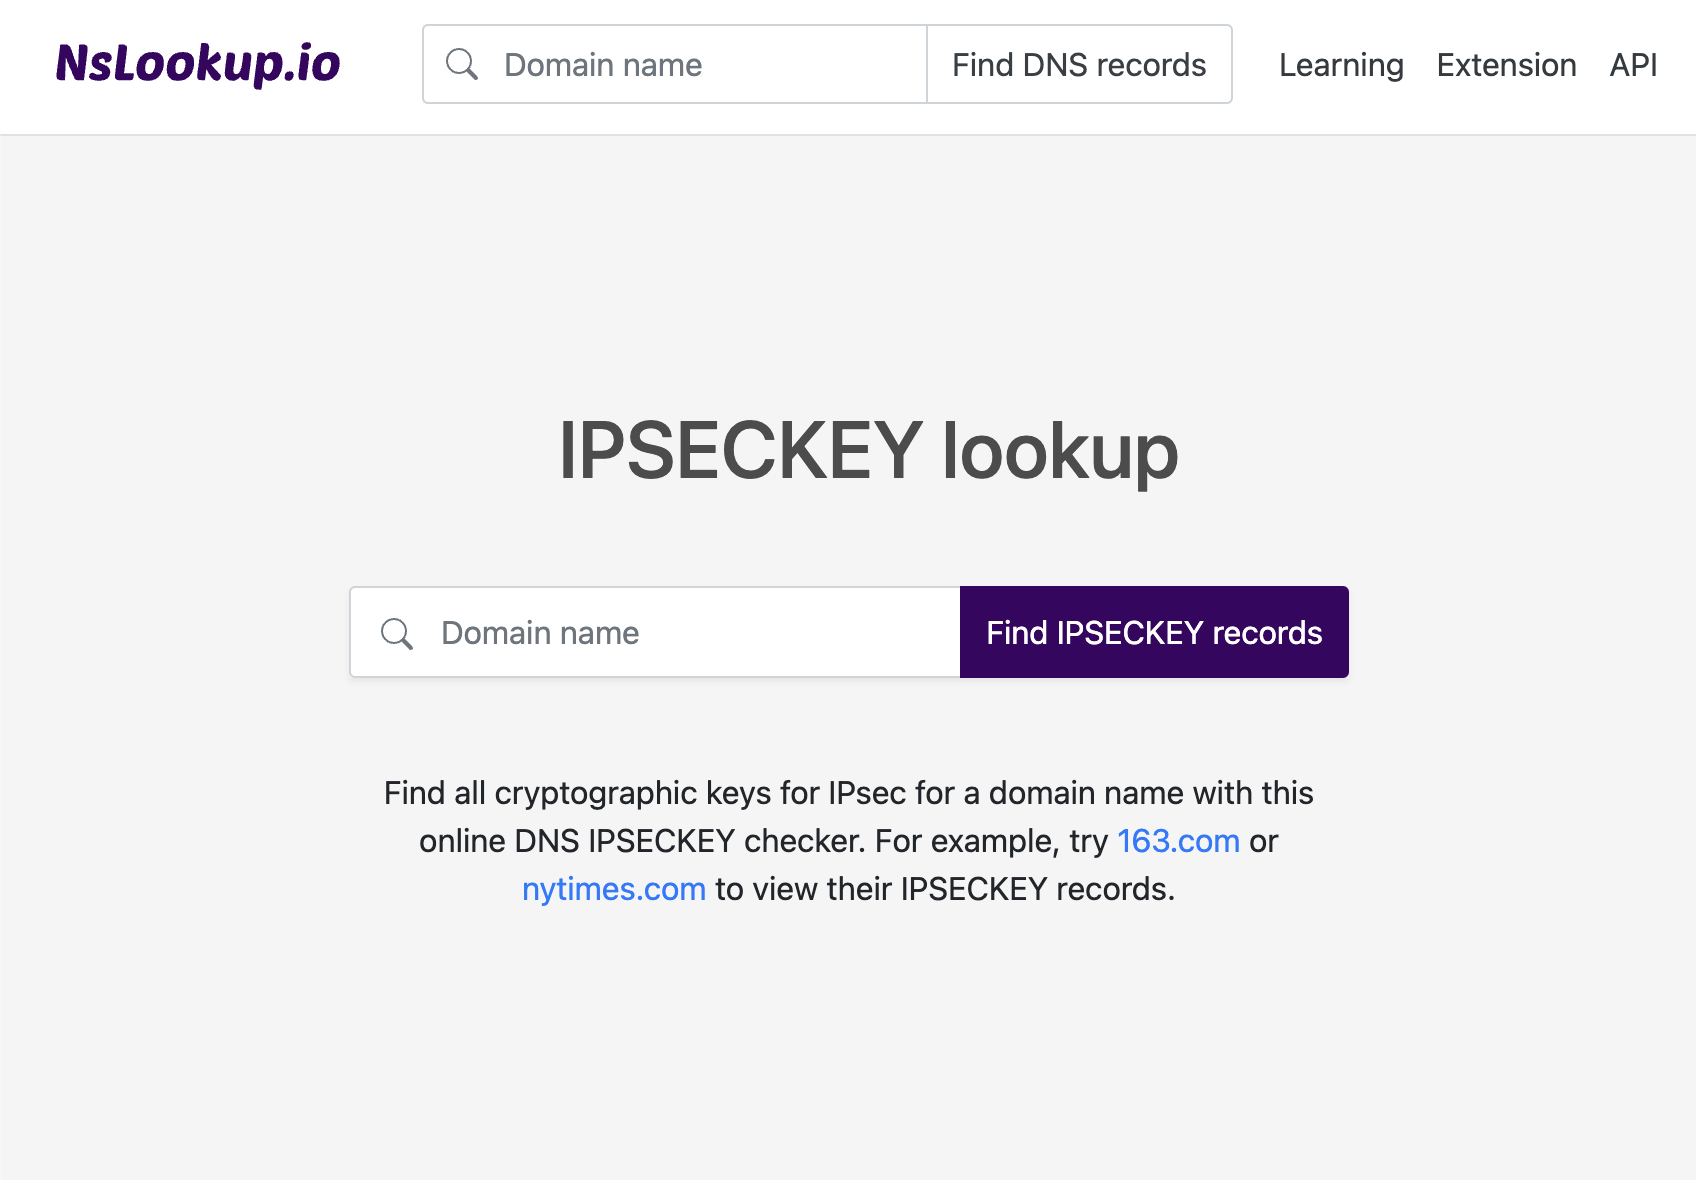 Open the IPSECKEY lookup tool